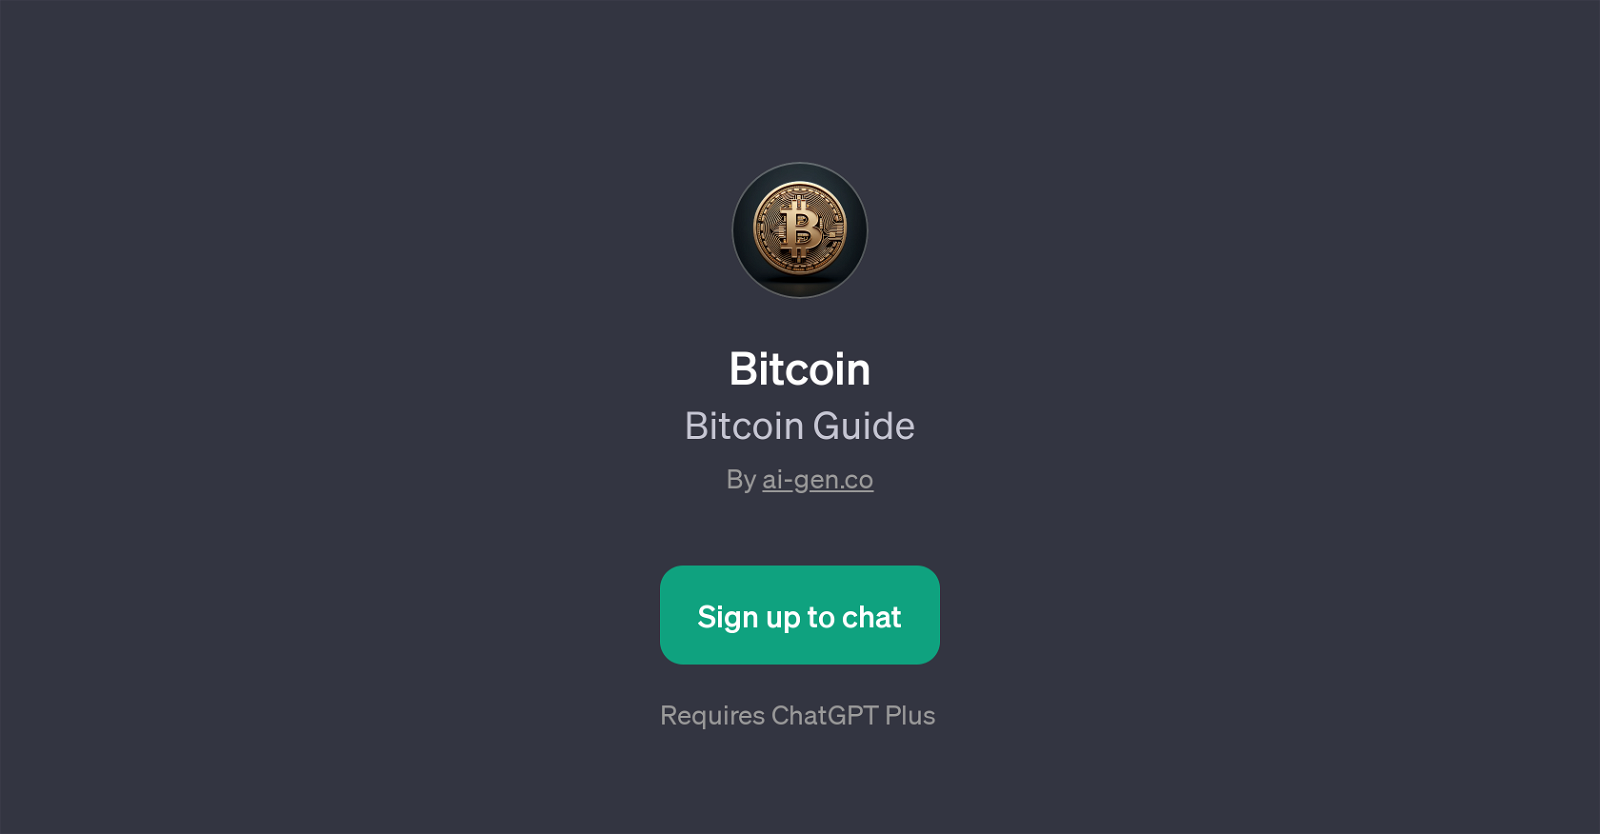 Bitcoin Guide website